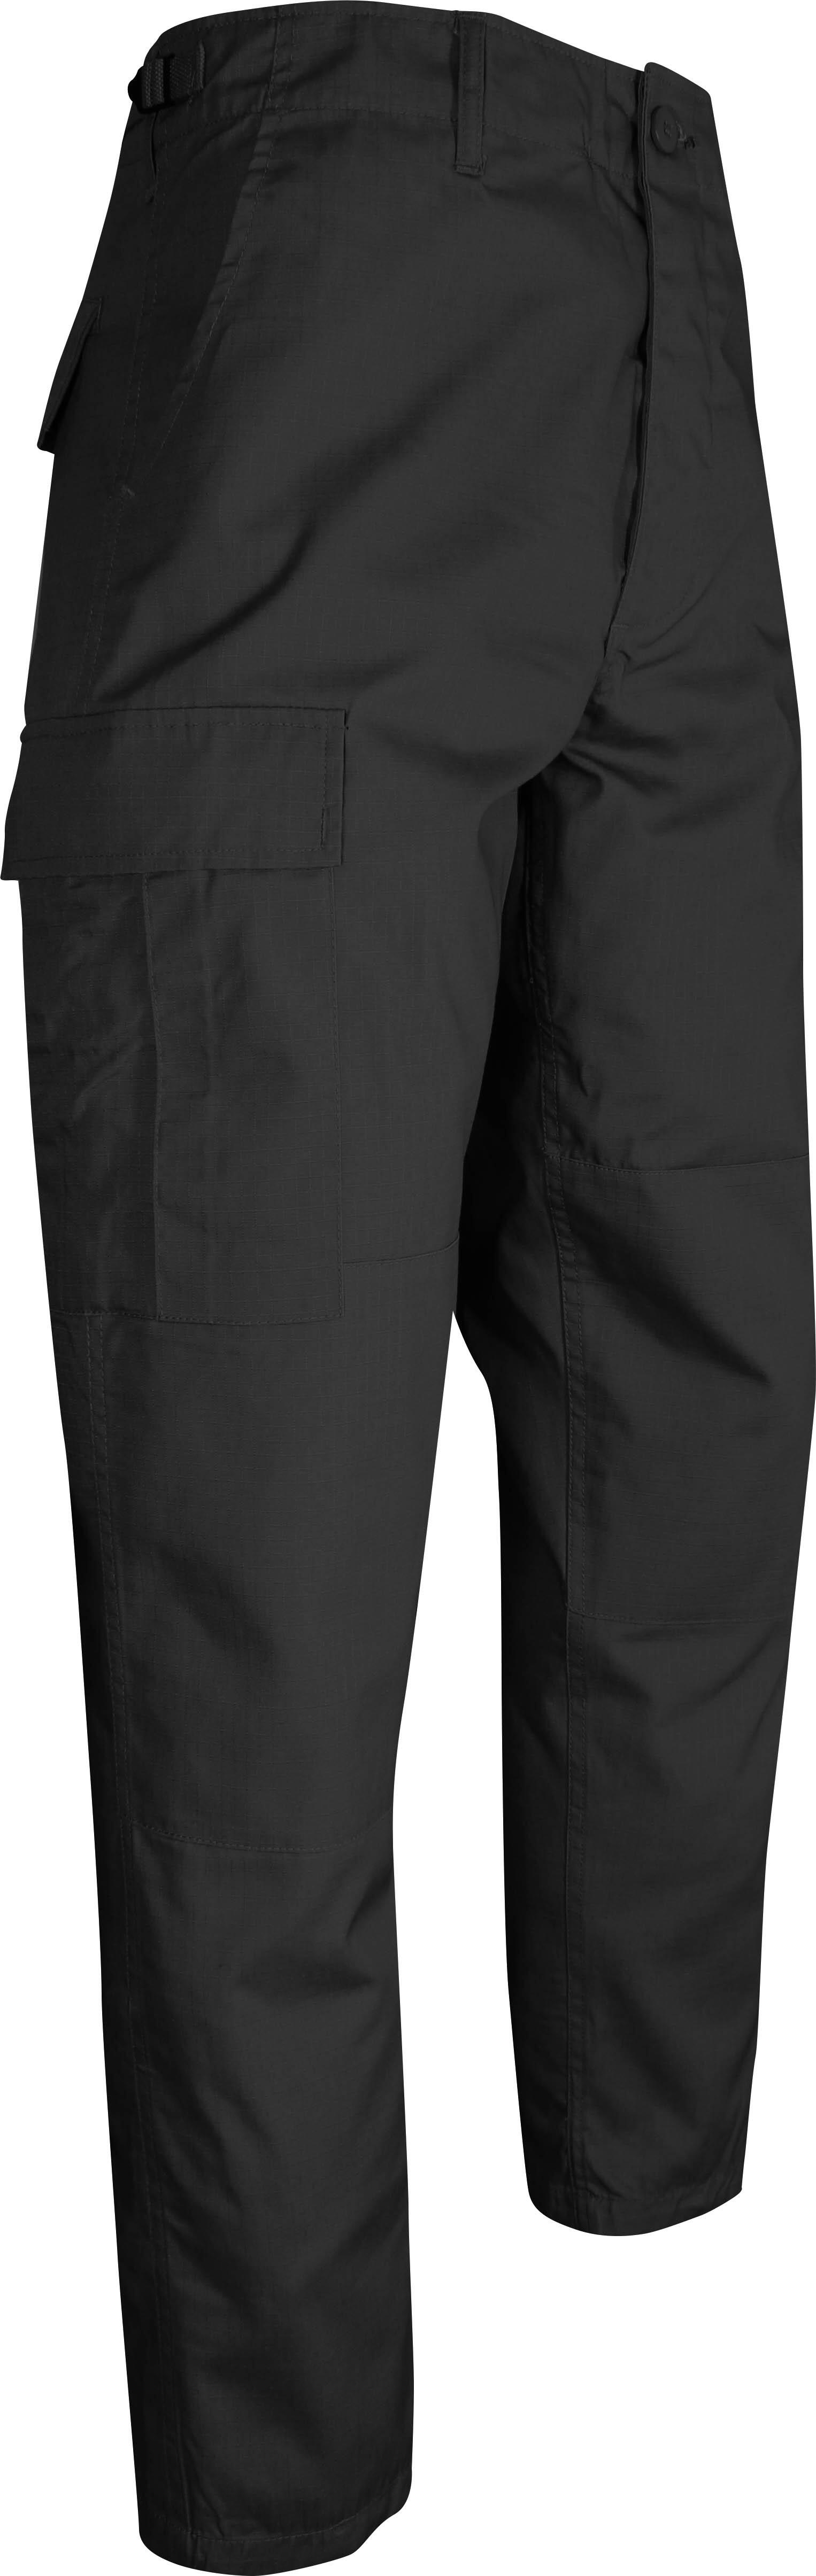 Viper Tactical BDU Trousers - Black